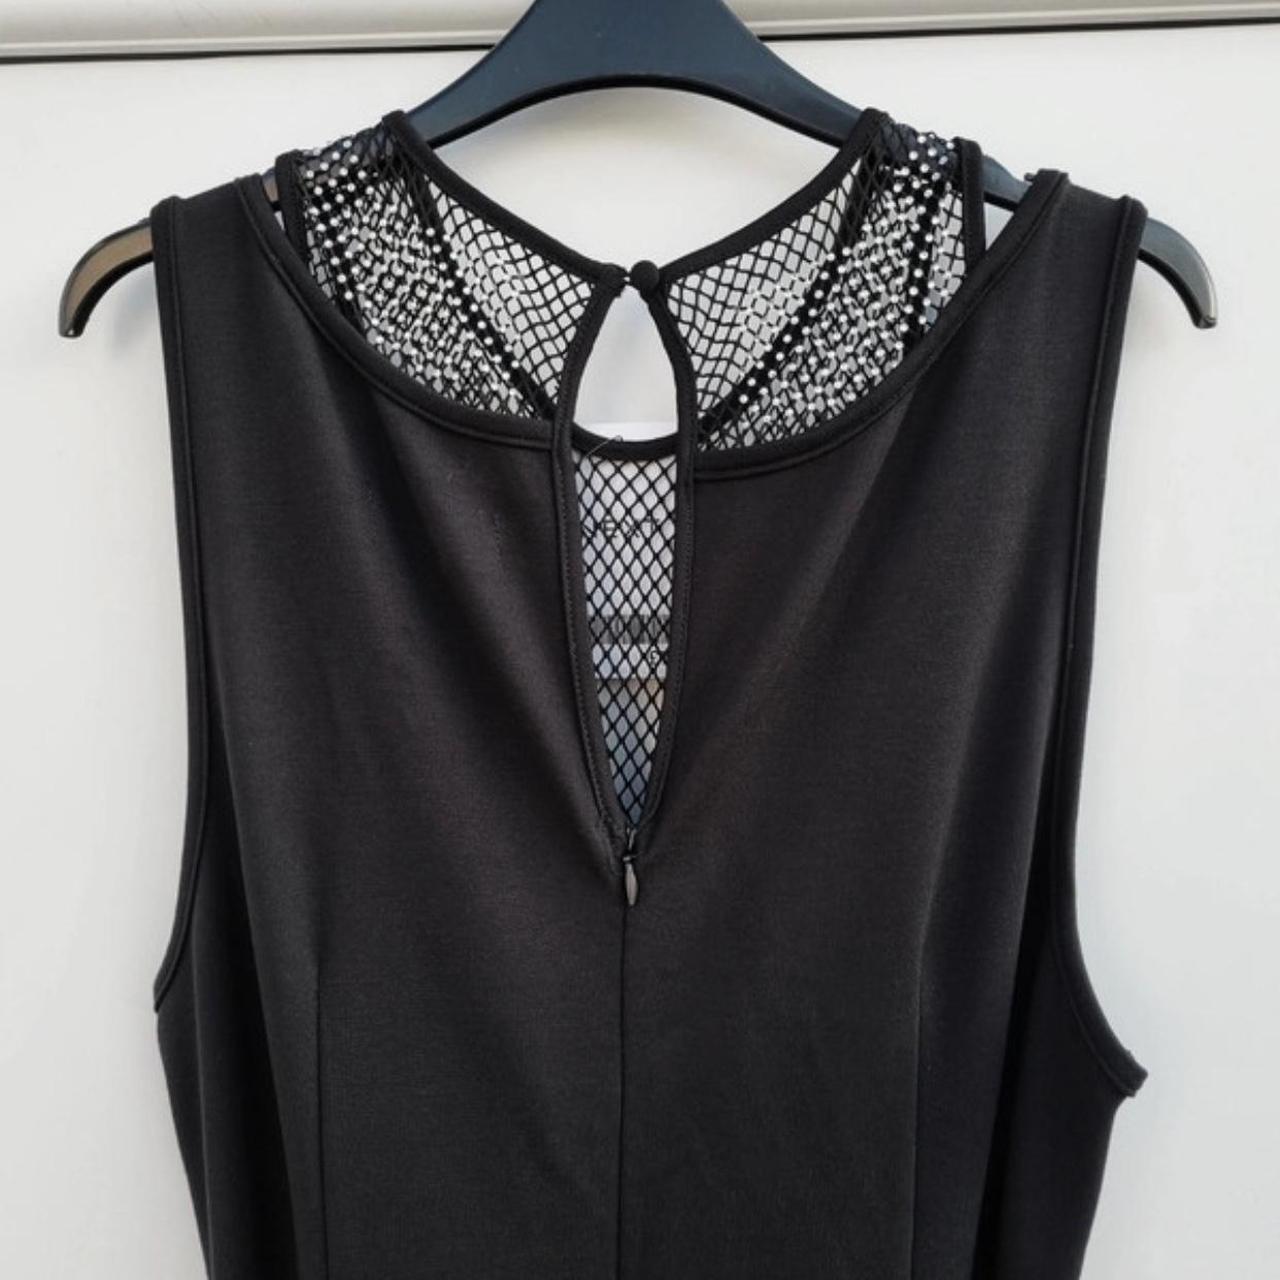 Torrid Studio Luxe Ponte Black Culotte Lace Jumpsuit - Depop